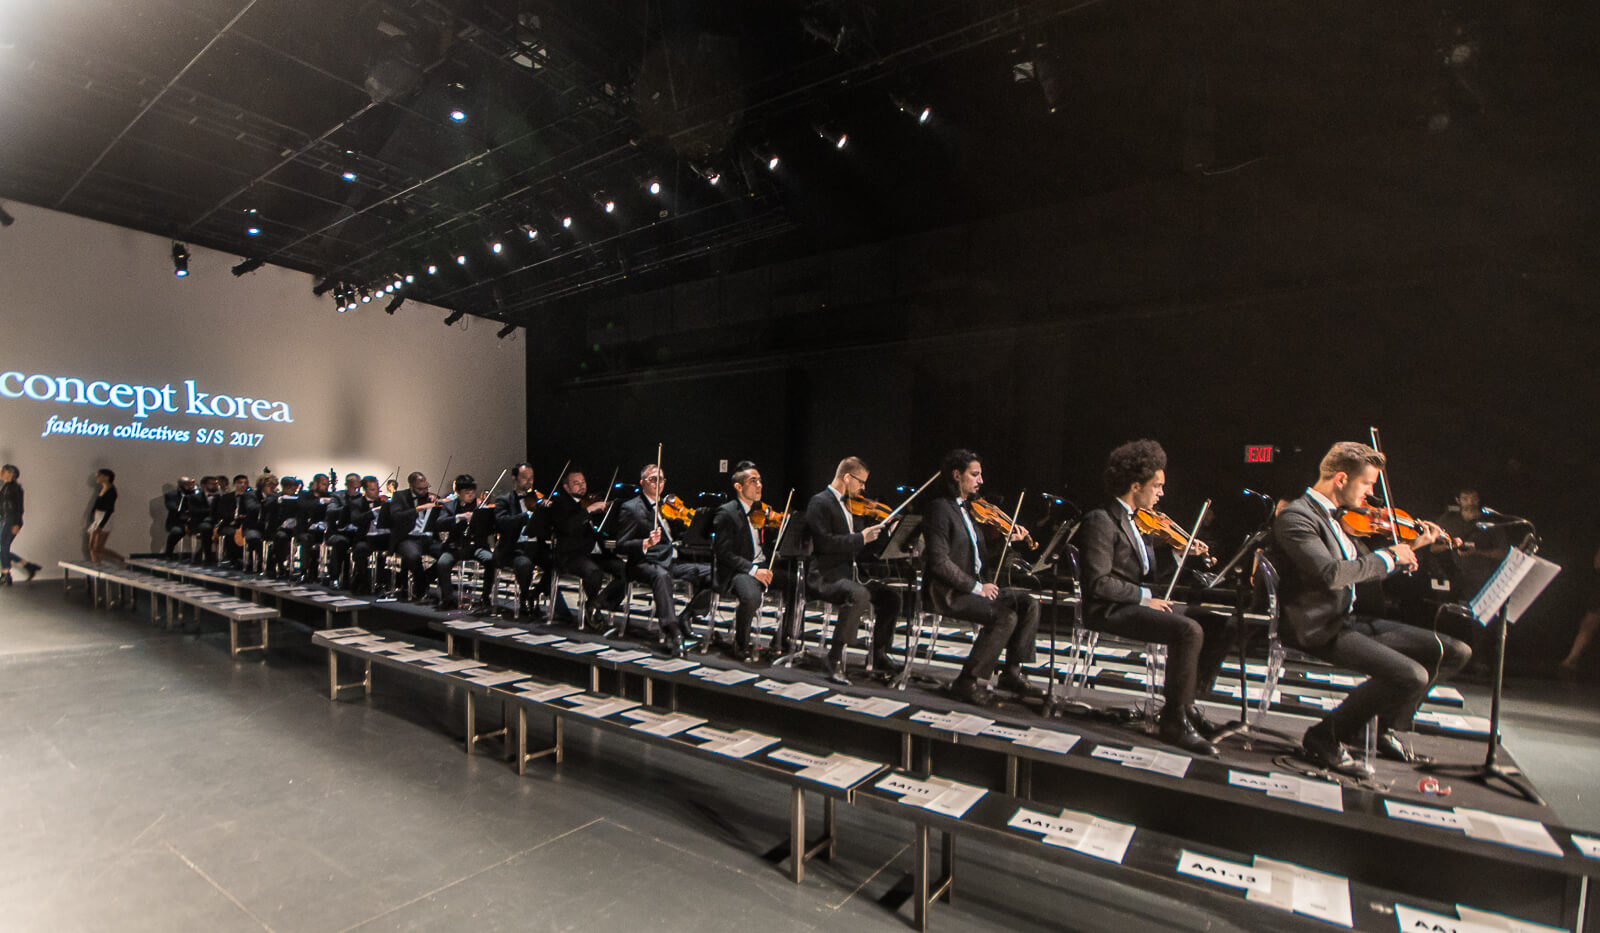 New York Fashion Week String Orchestra 